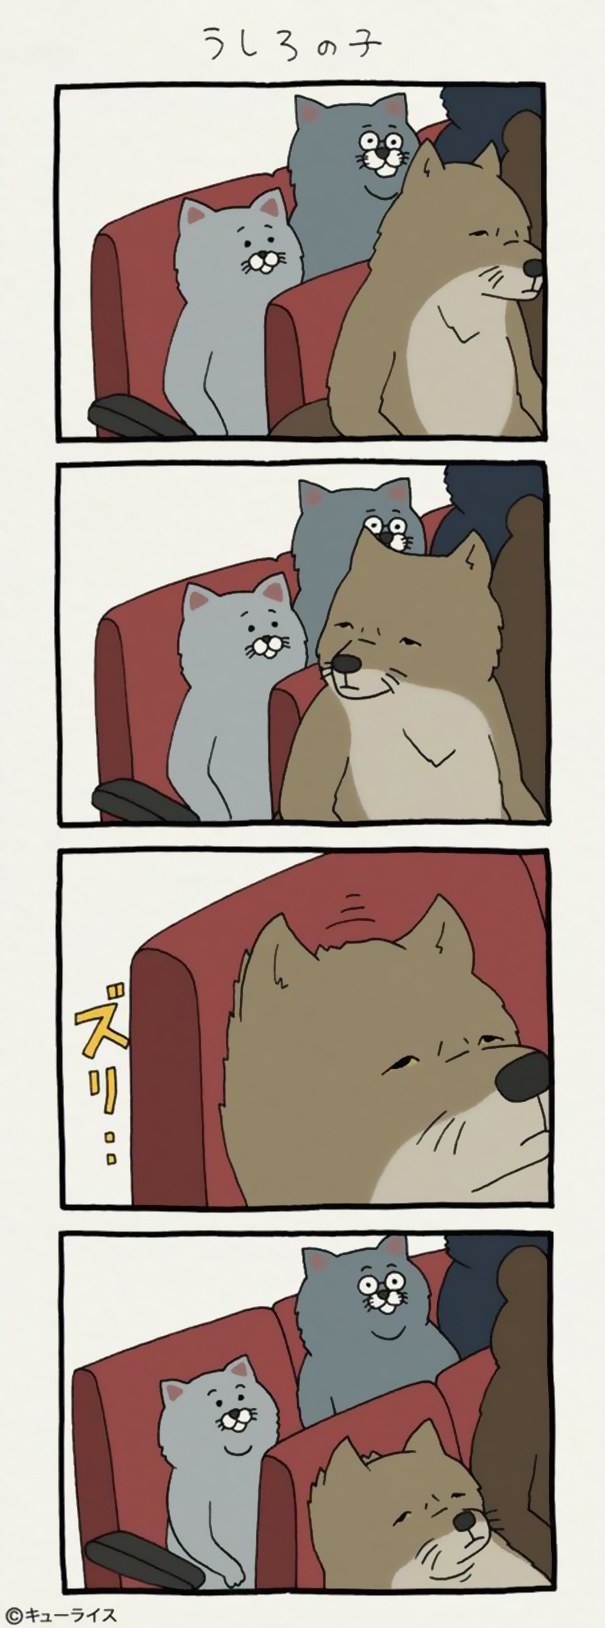 Dog-cartoon-comics-qrais-japan